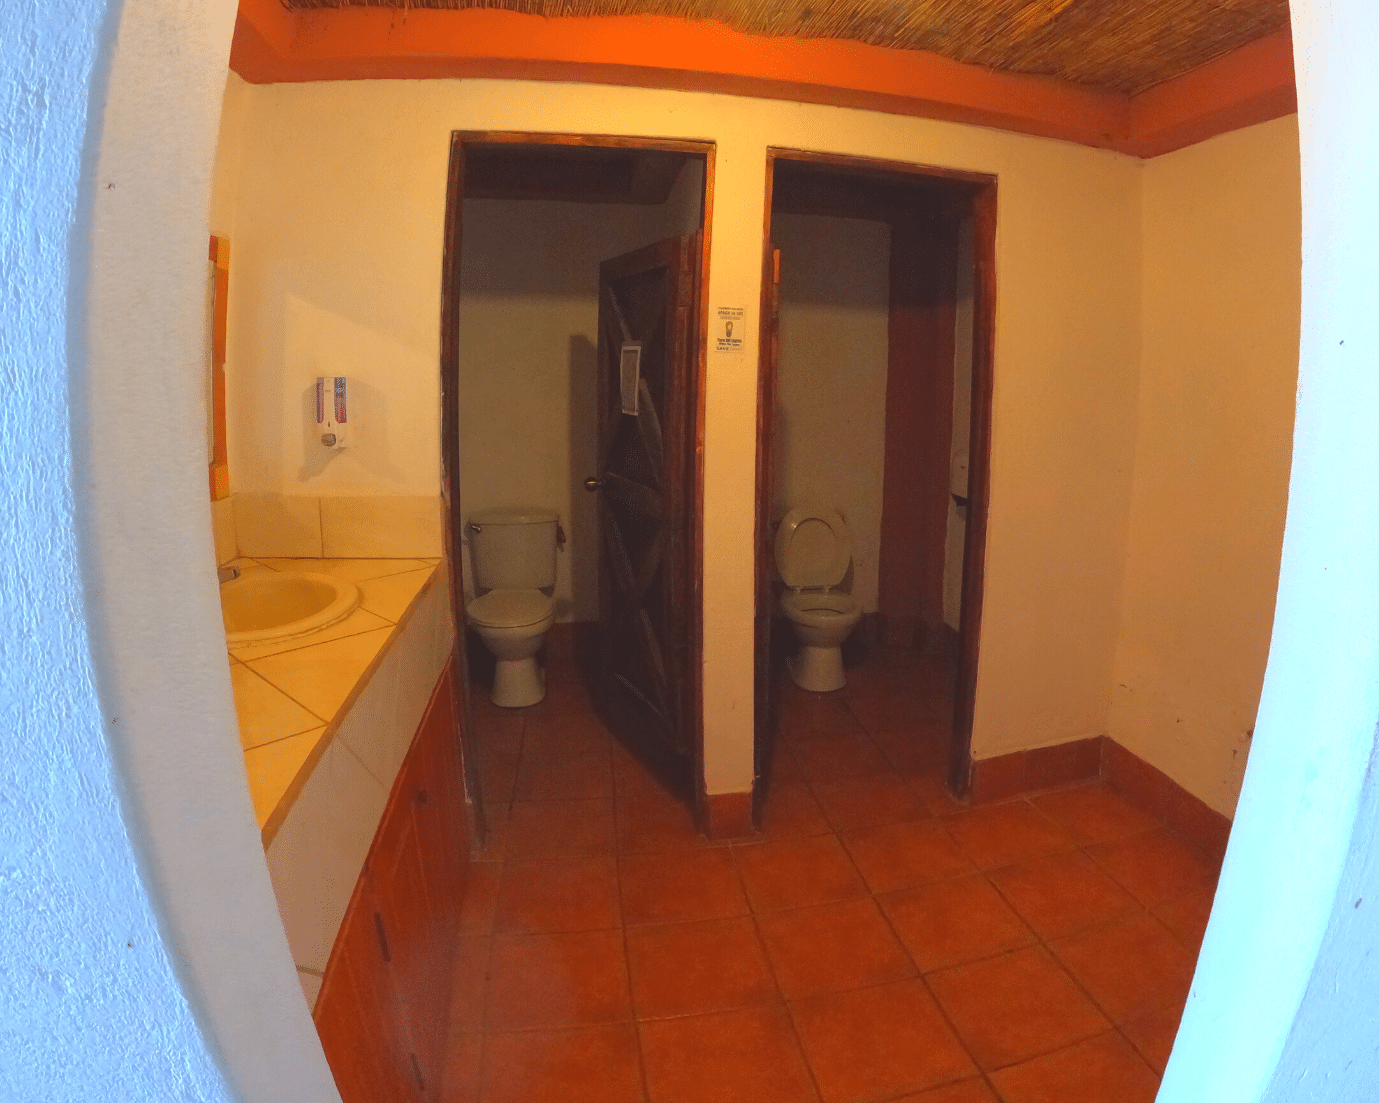 Bathrooms at Oropendola Waterfall